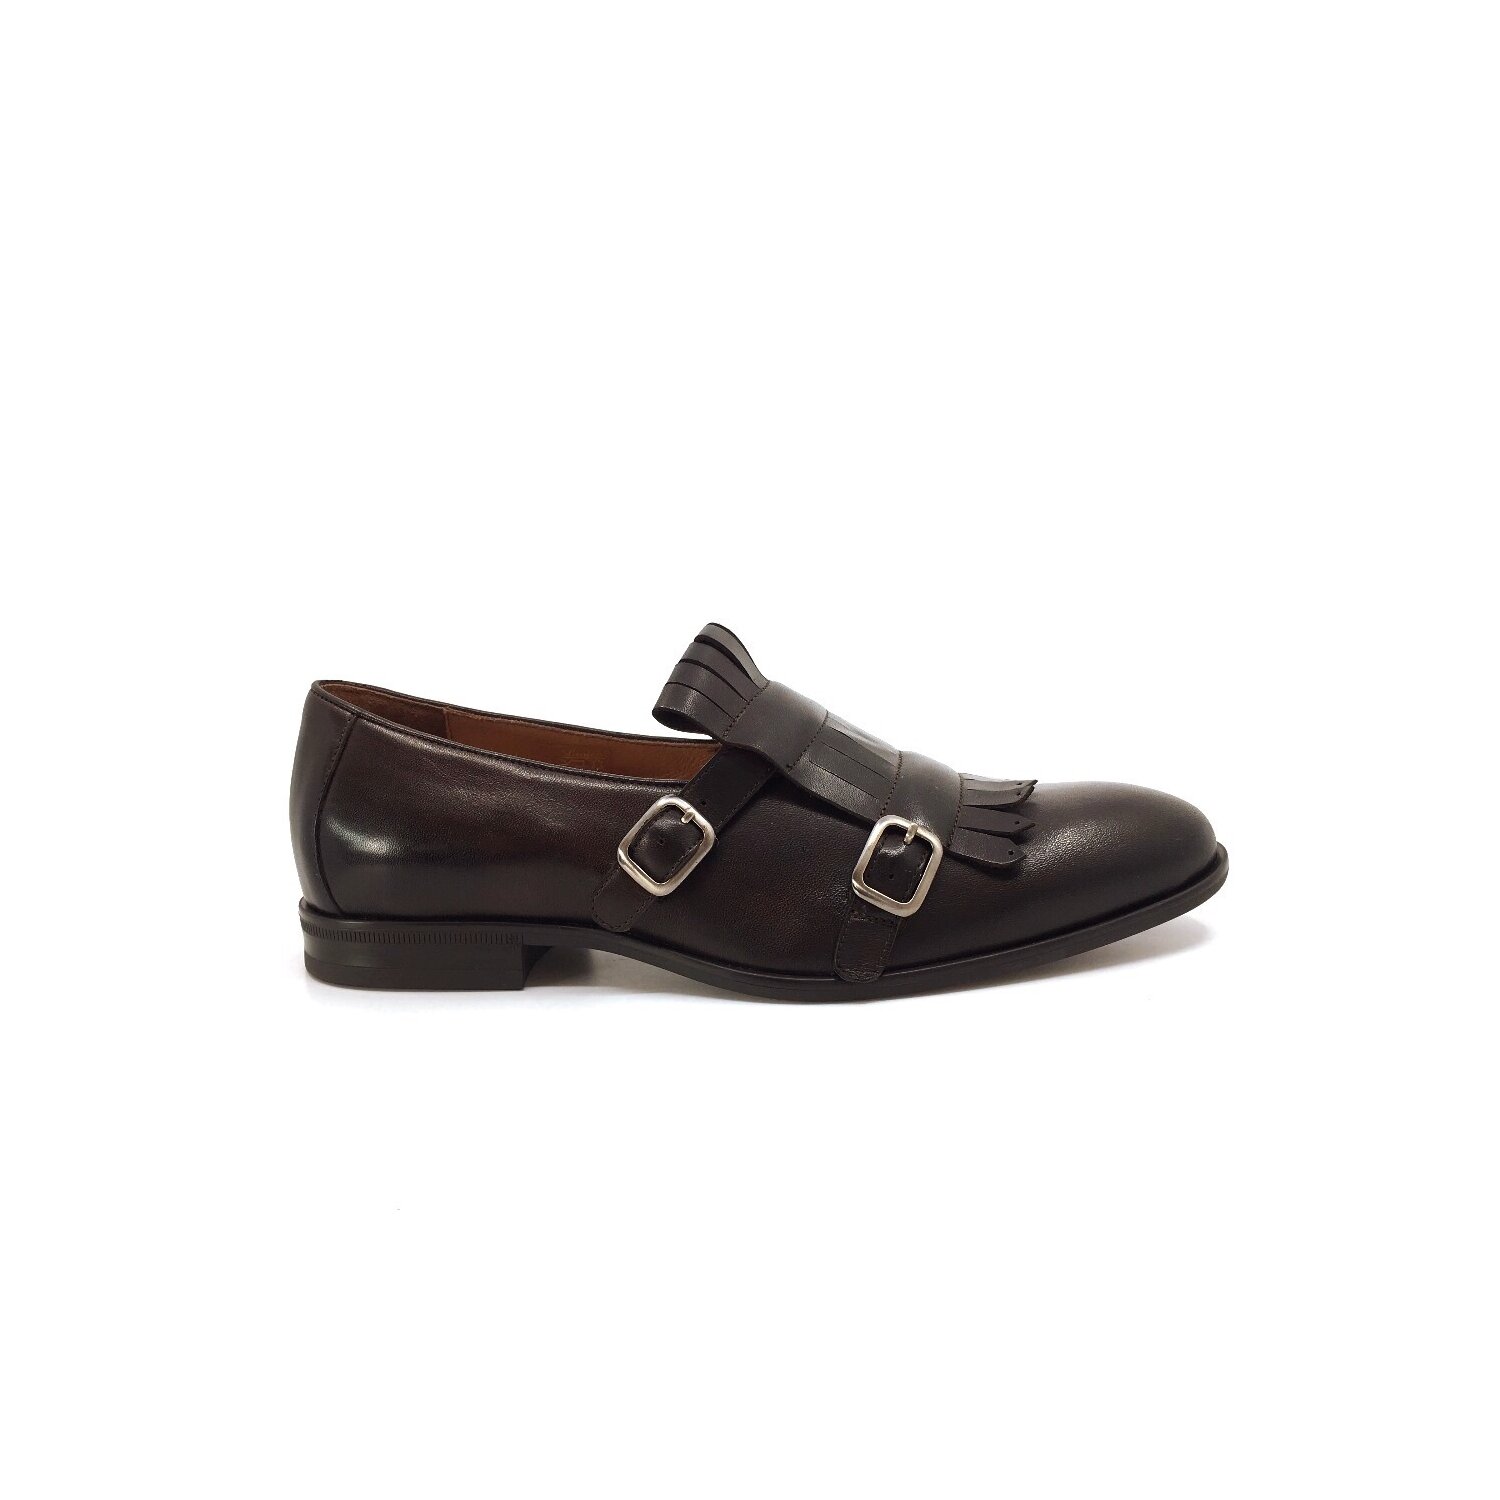 Pantofi eleganti barbati, cu franjuri din piele naturala, Leofex - 586 maro box